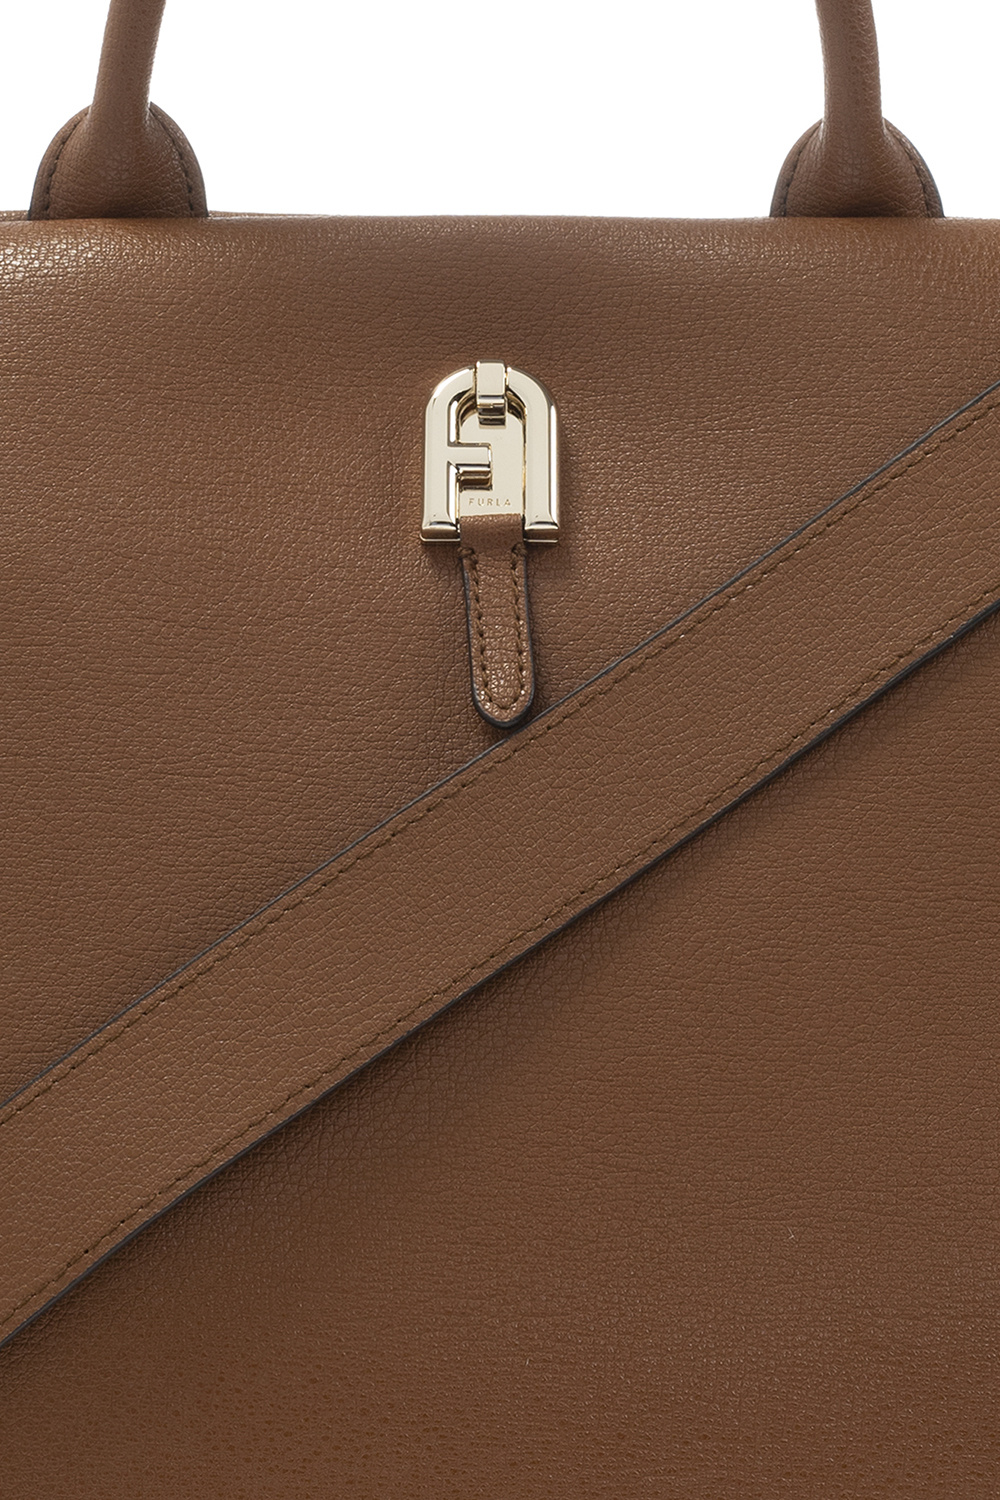 Dior Saddle Handbag 389713  palazzo s shoulder bag furla bag